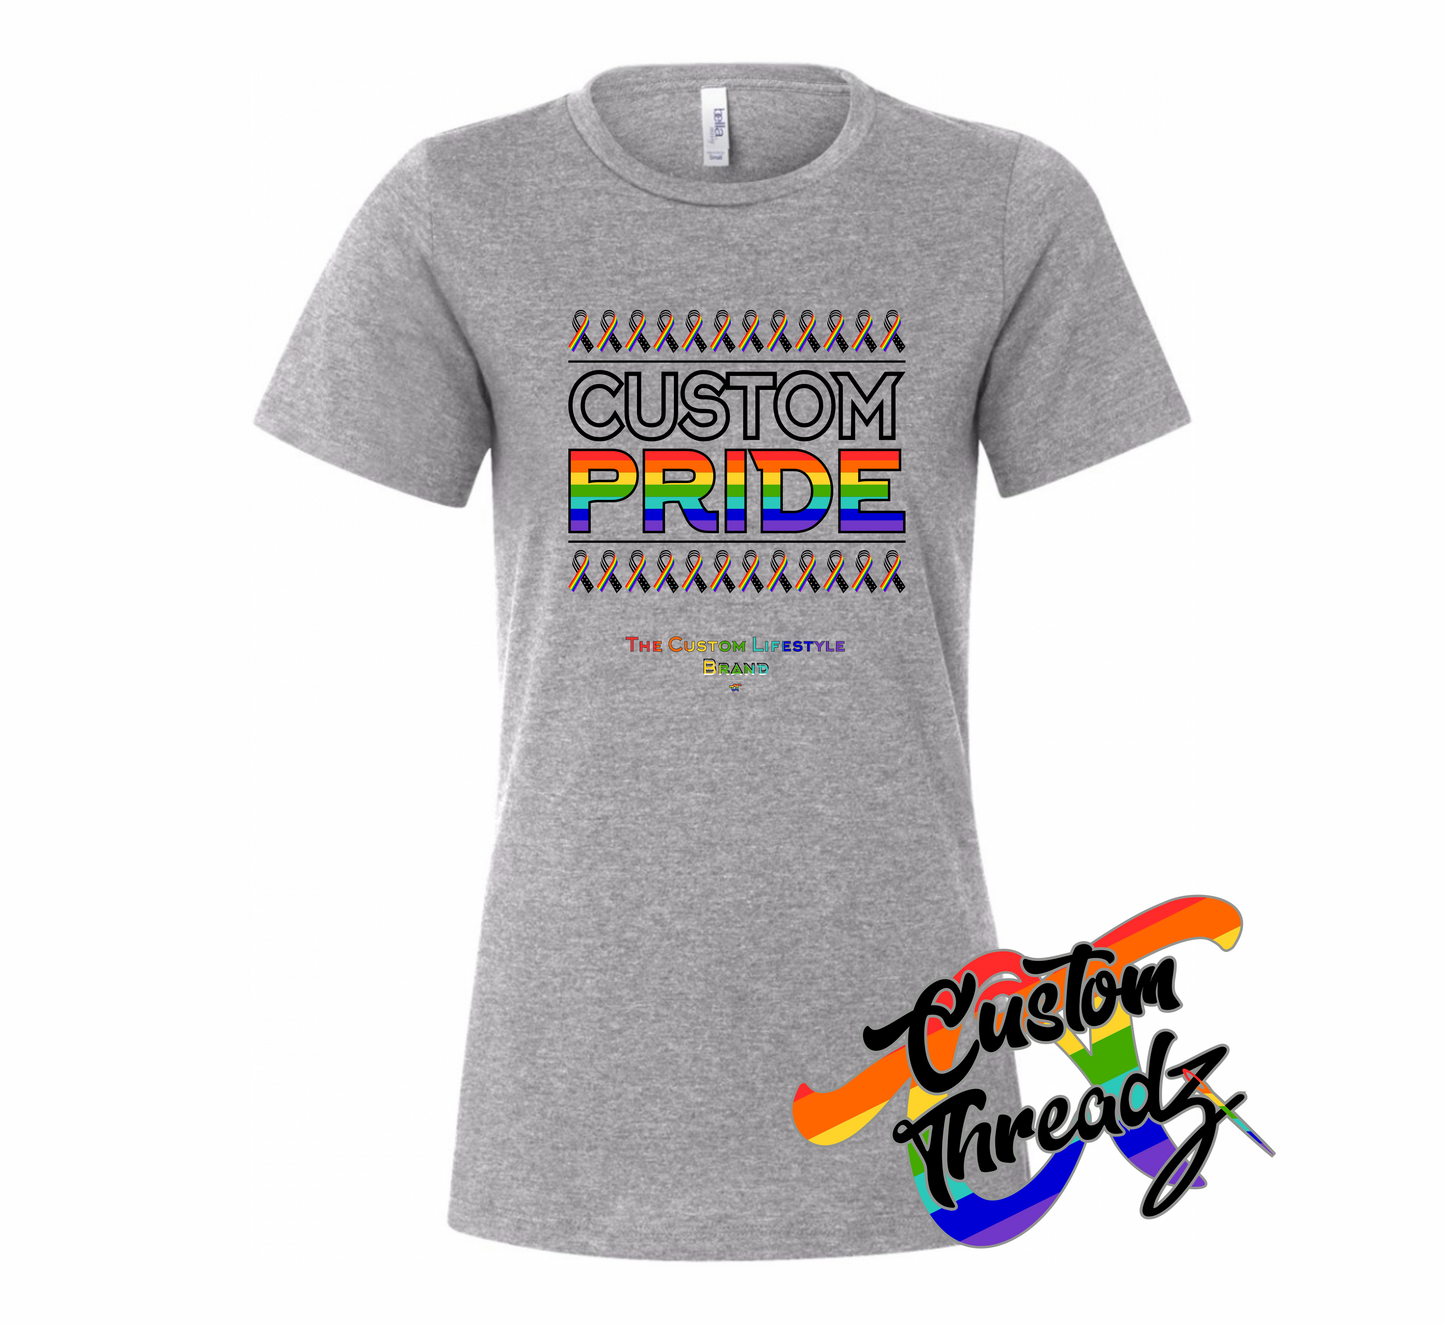 athletic heather grey womens tee with custom pride rainbow DTG printed design